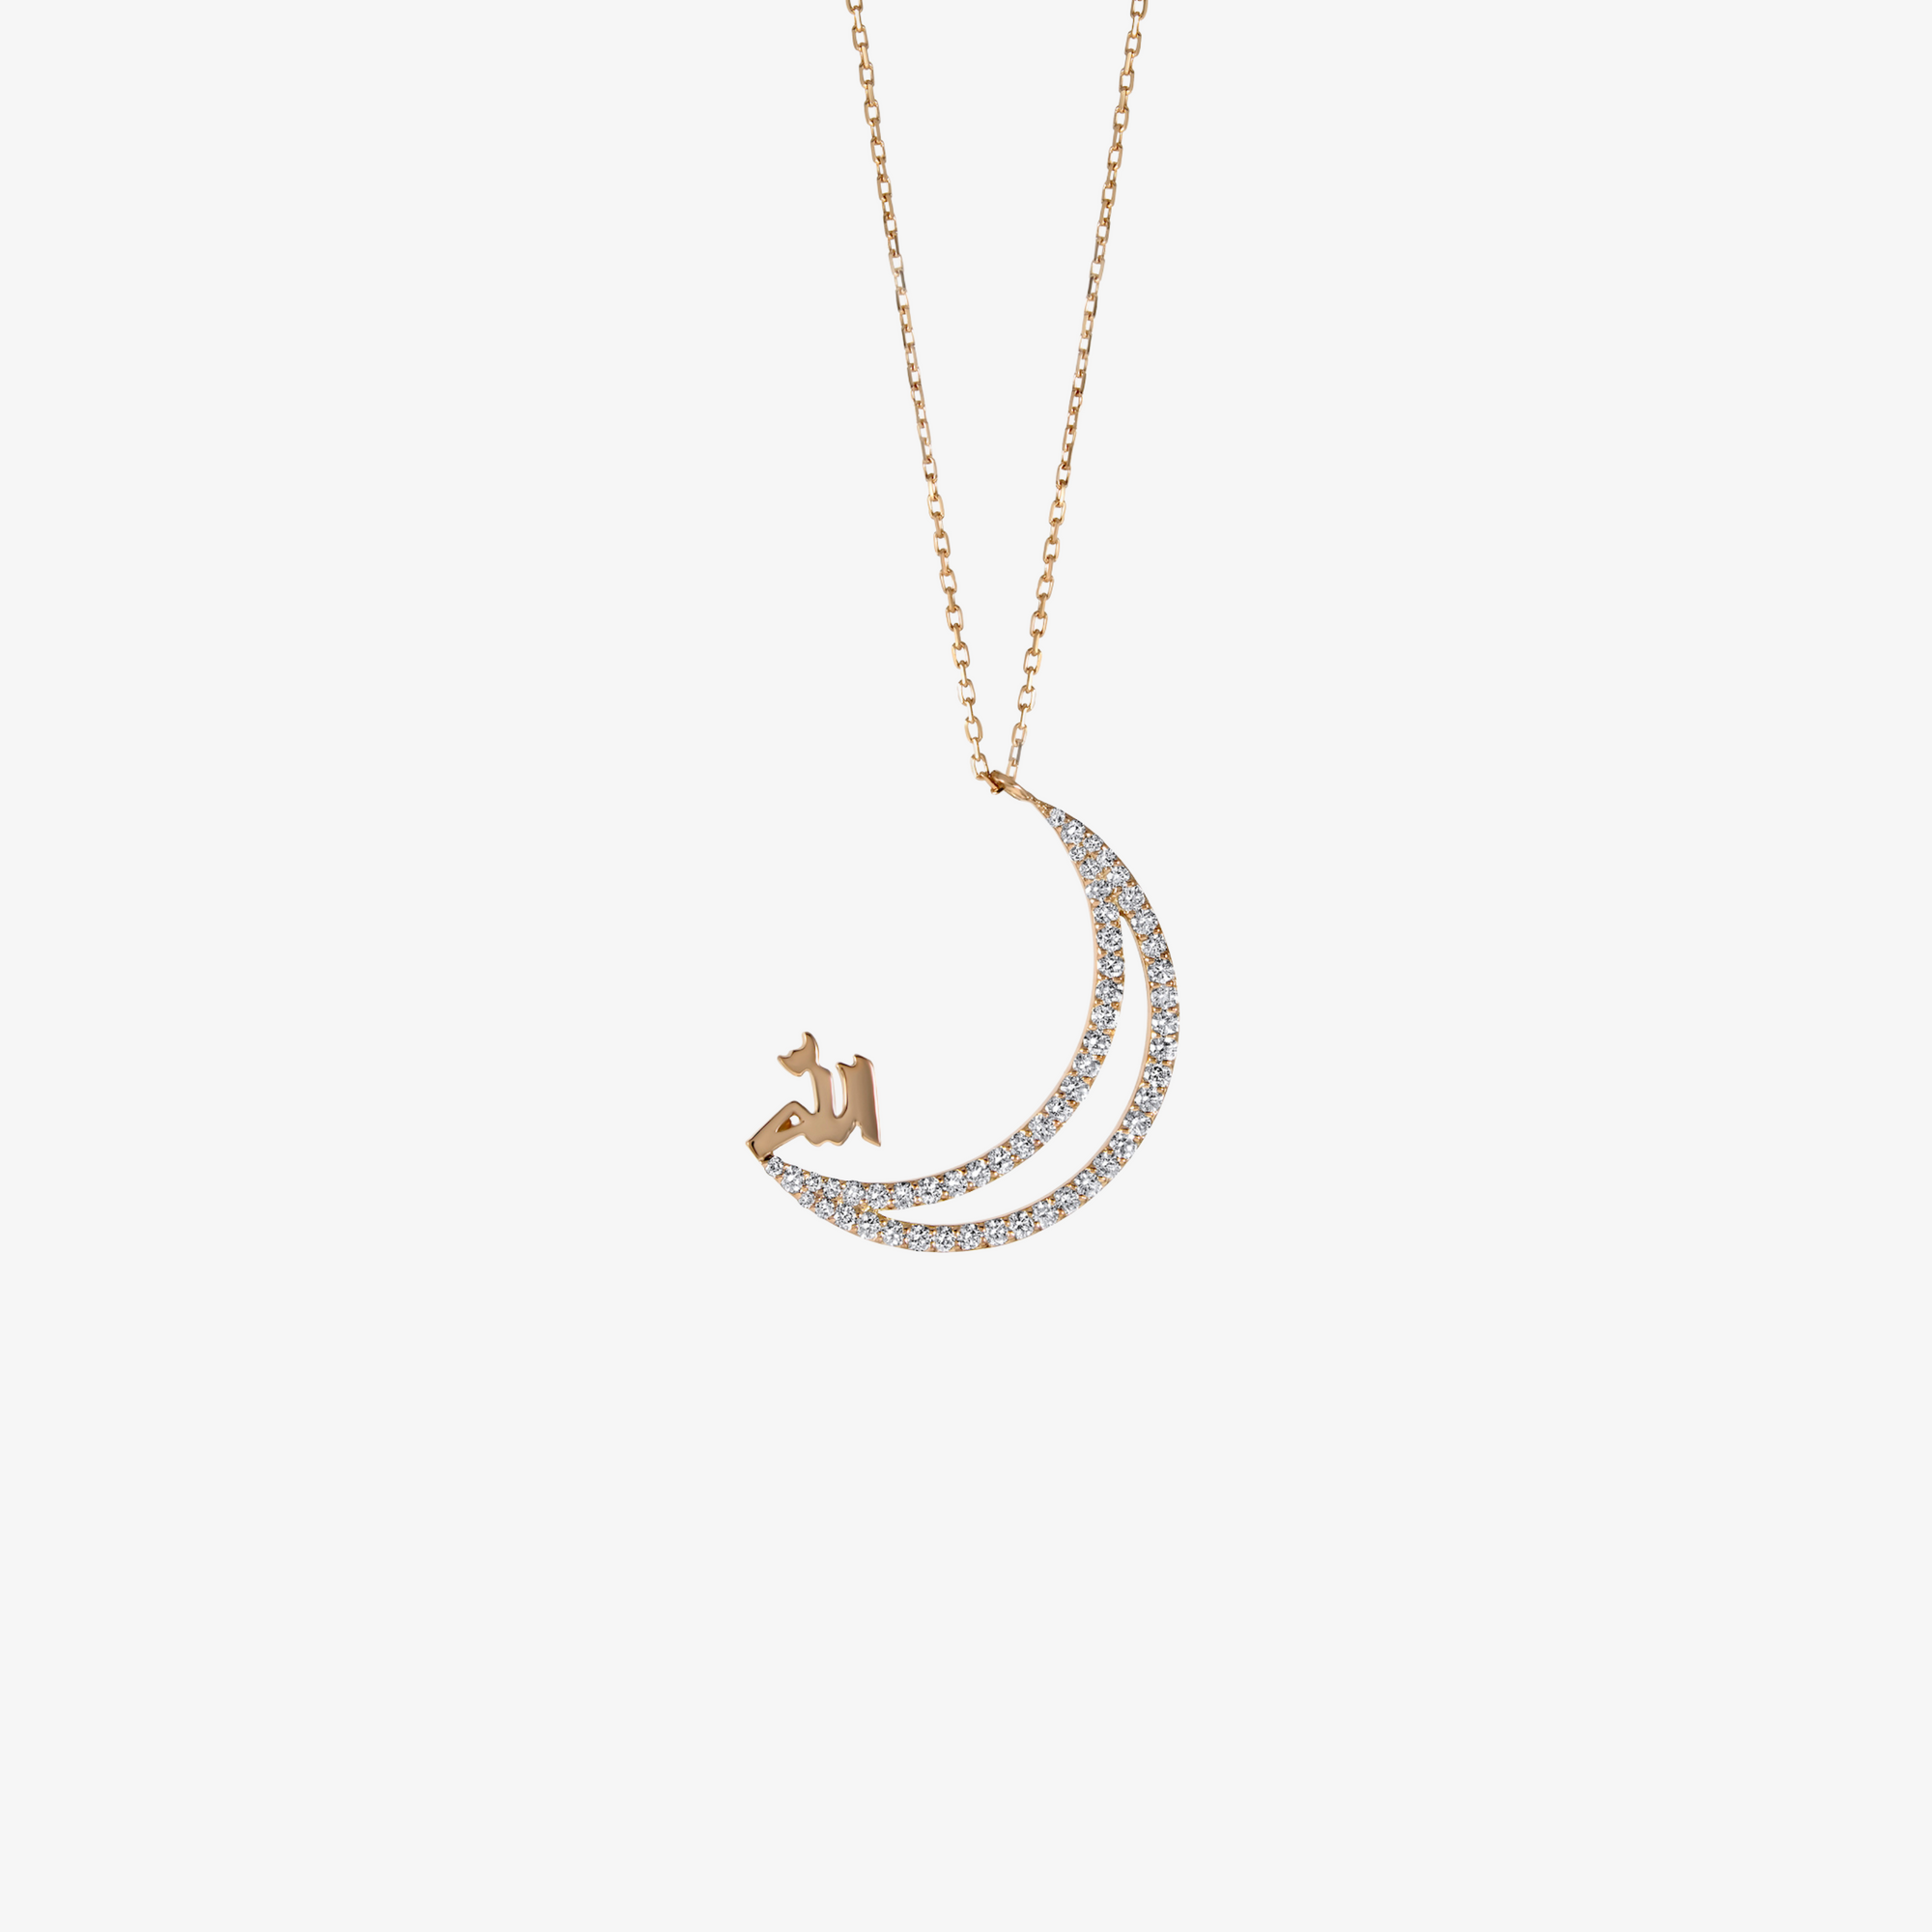 OULA - 18K Gold & Diamond "Allah" Moon Necklace